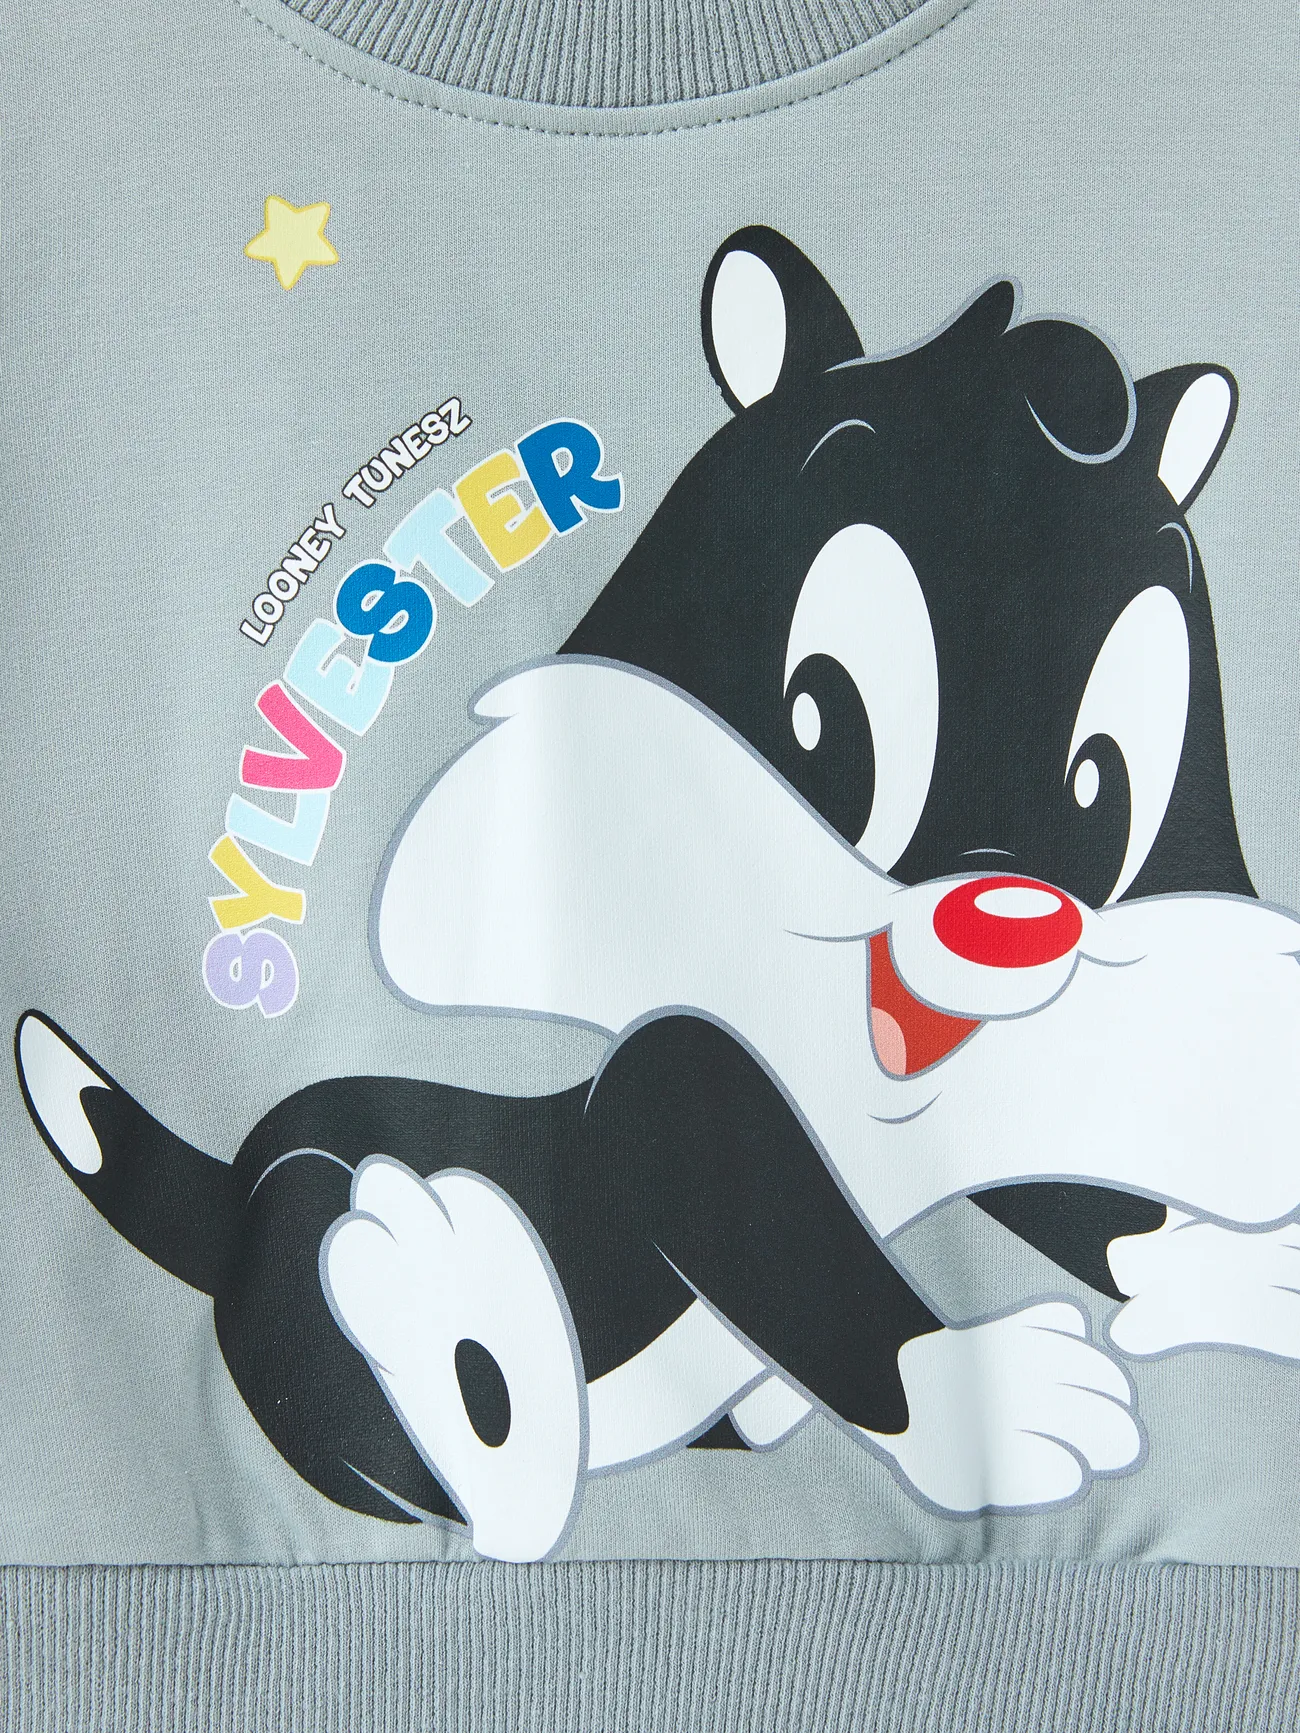 Looney Tunes Baby Boy/Girl Cartoon Animal Print Cotton Long-sleeve Sweatshirt Grey big image 1